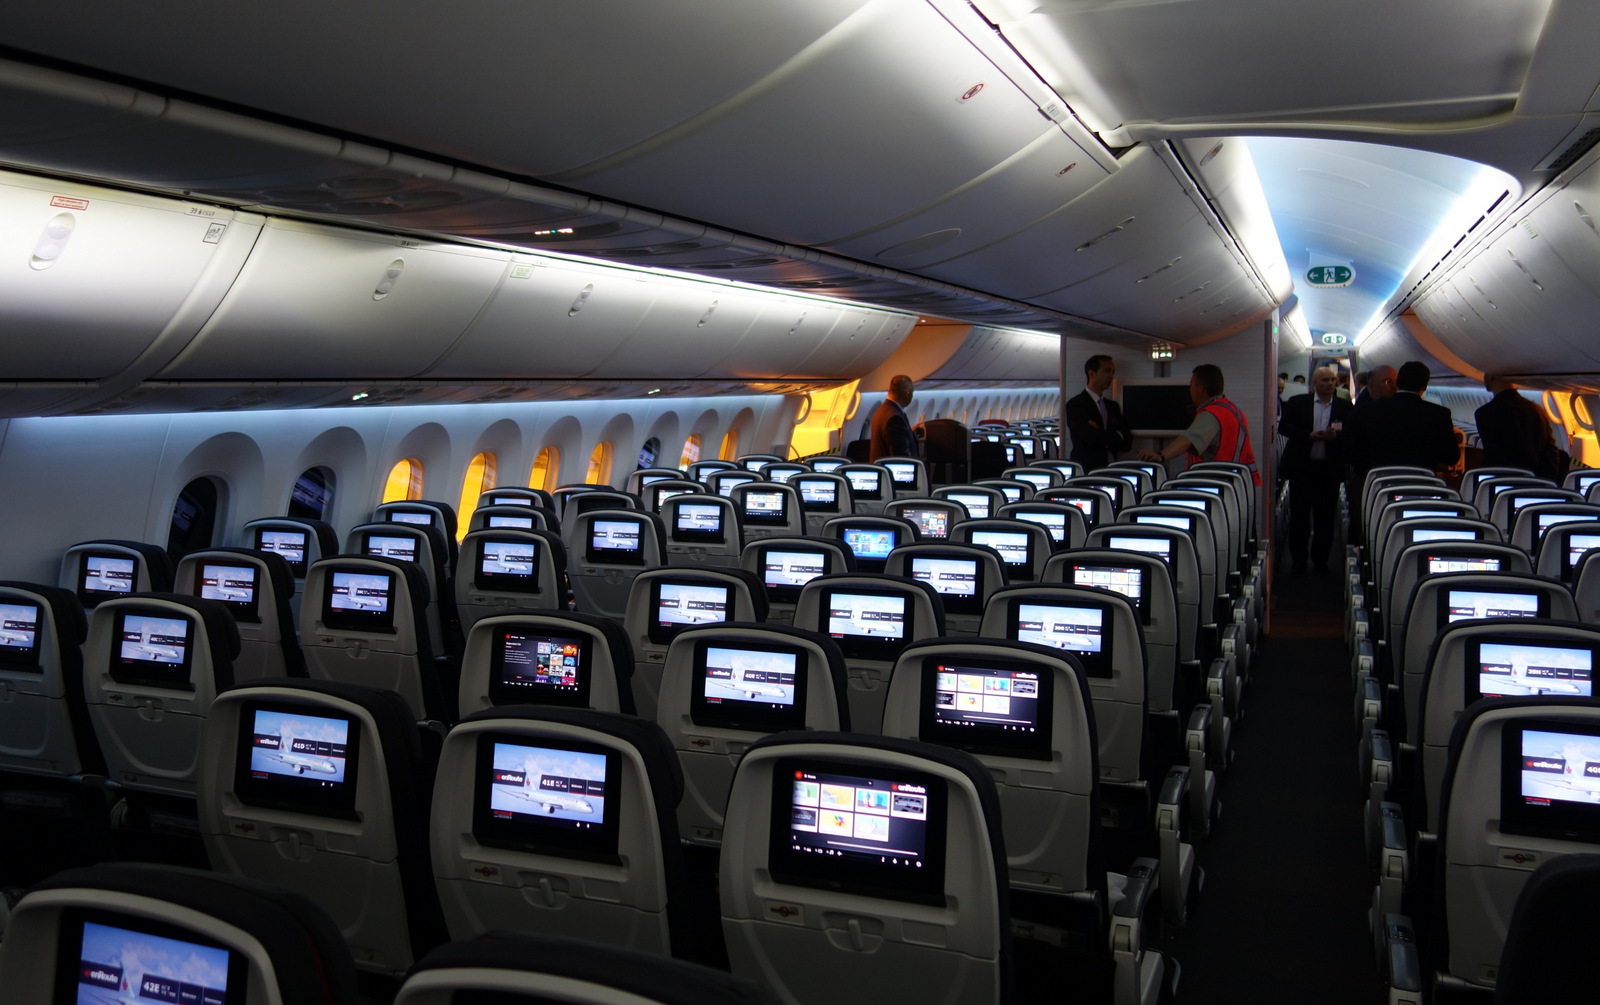 Air Canada Premieres its First Boeing 787-8 - Wingborn Ltd